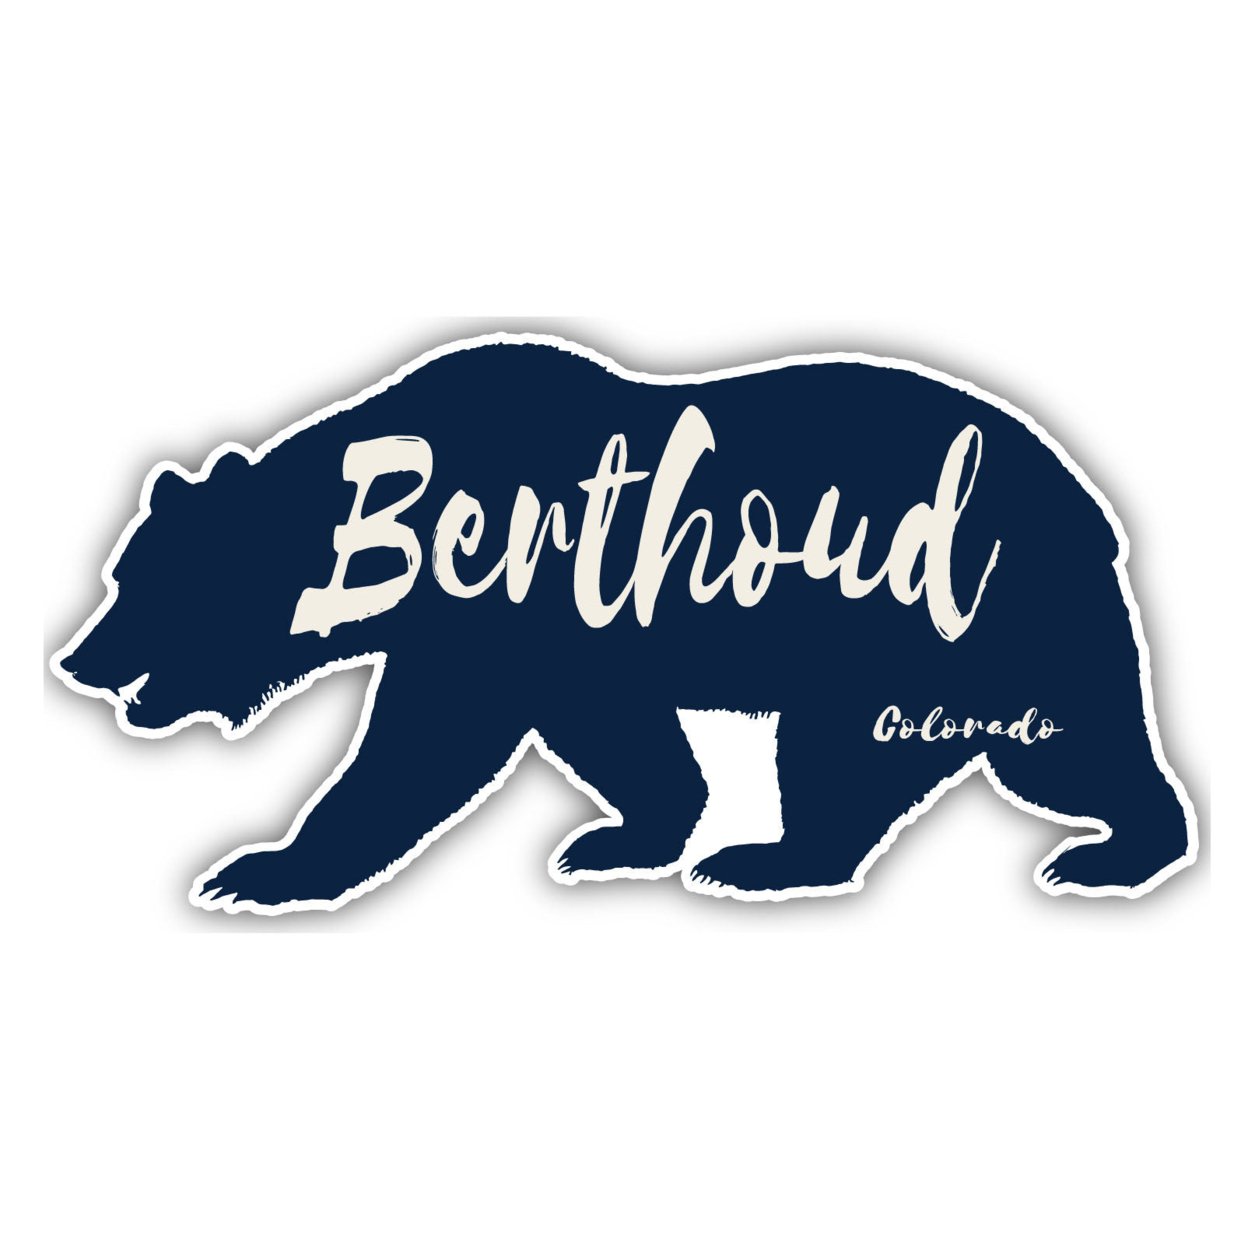 Berthoud Colorado Souvenir Decorative Stickers (Choose Theme And Size) - Single Unit, 8-Inch, Adventures Awaits